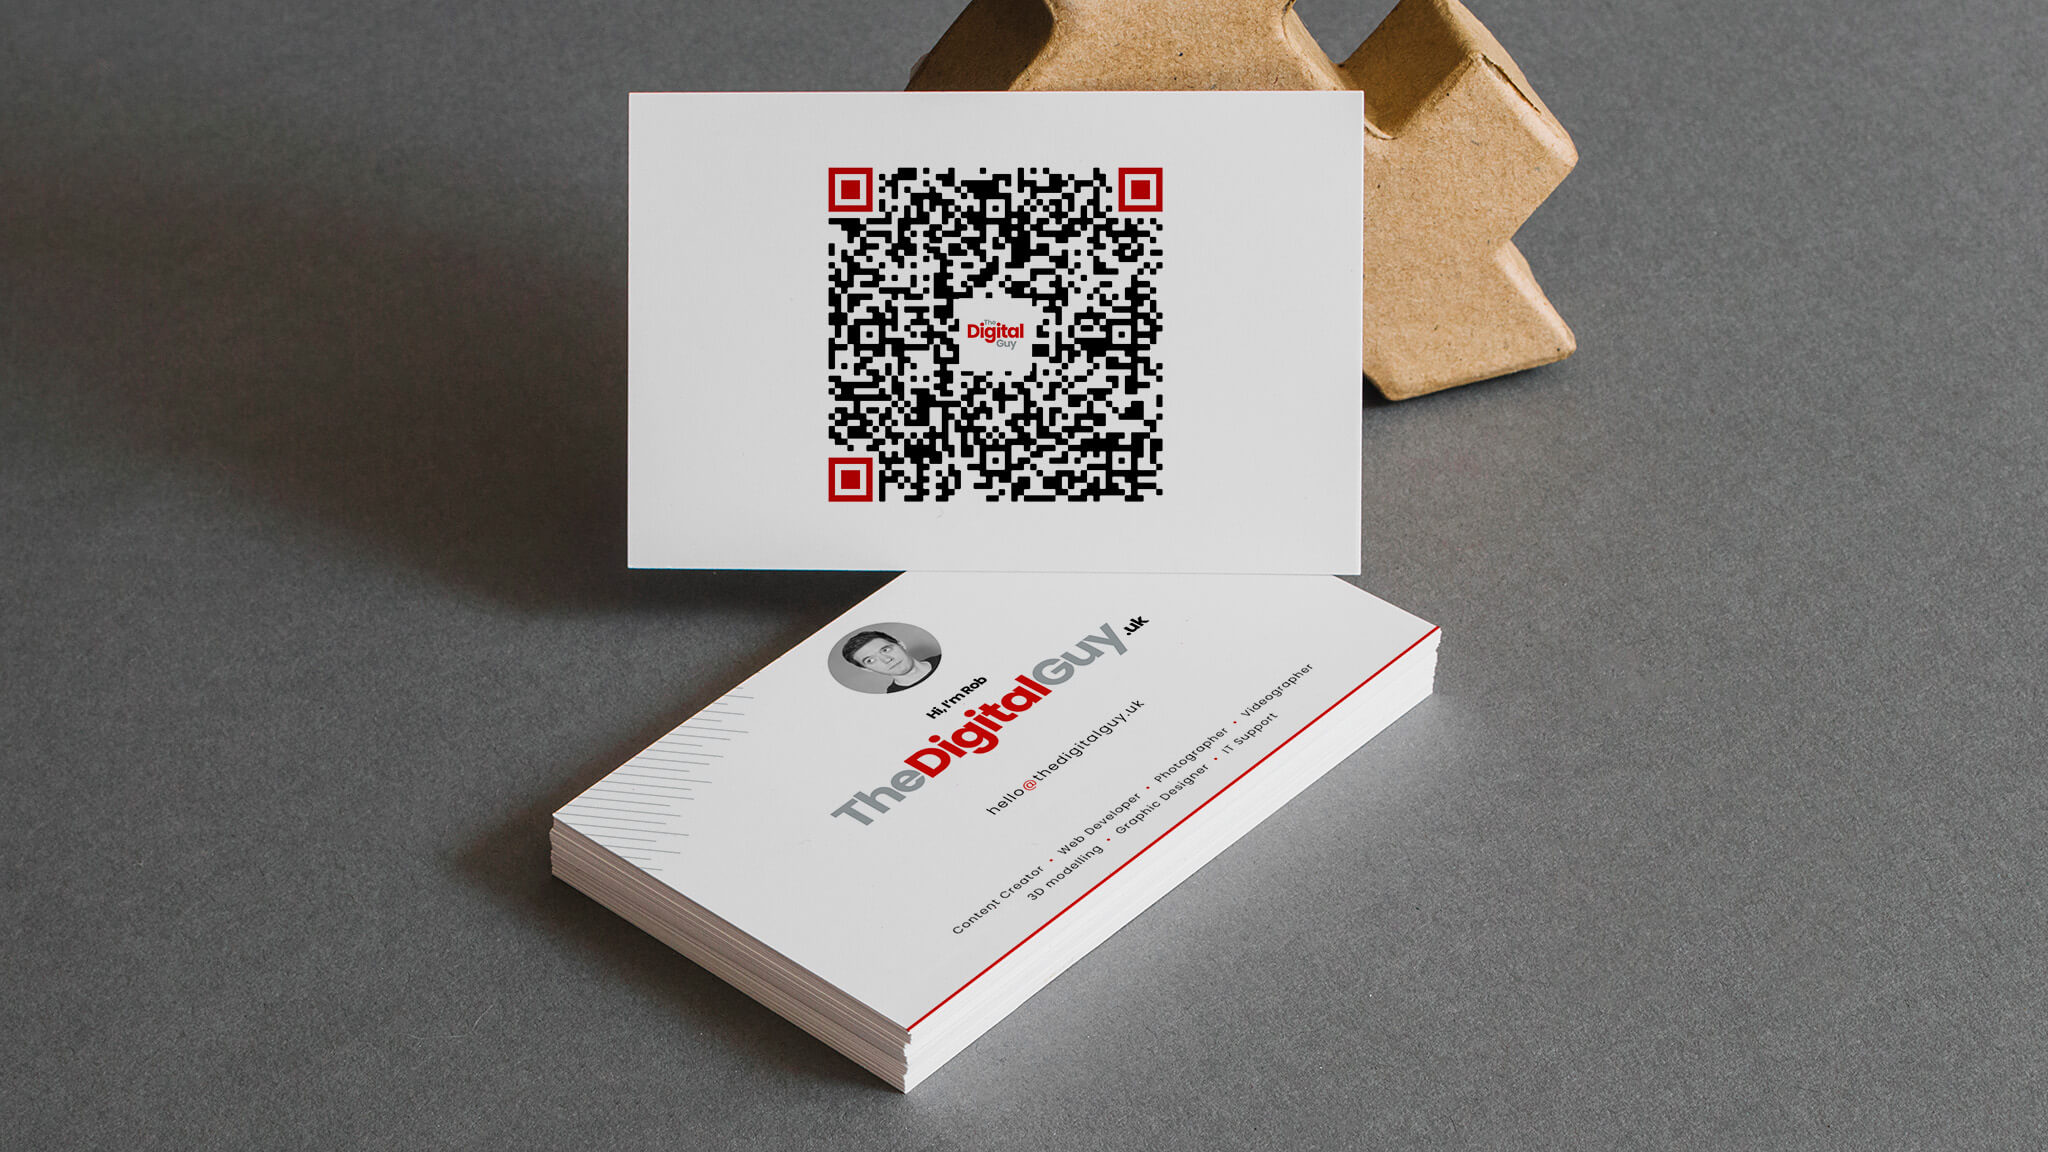 Business card mock-up image for The Digital Guy